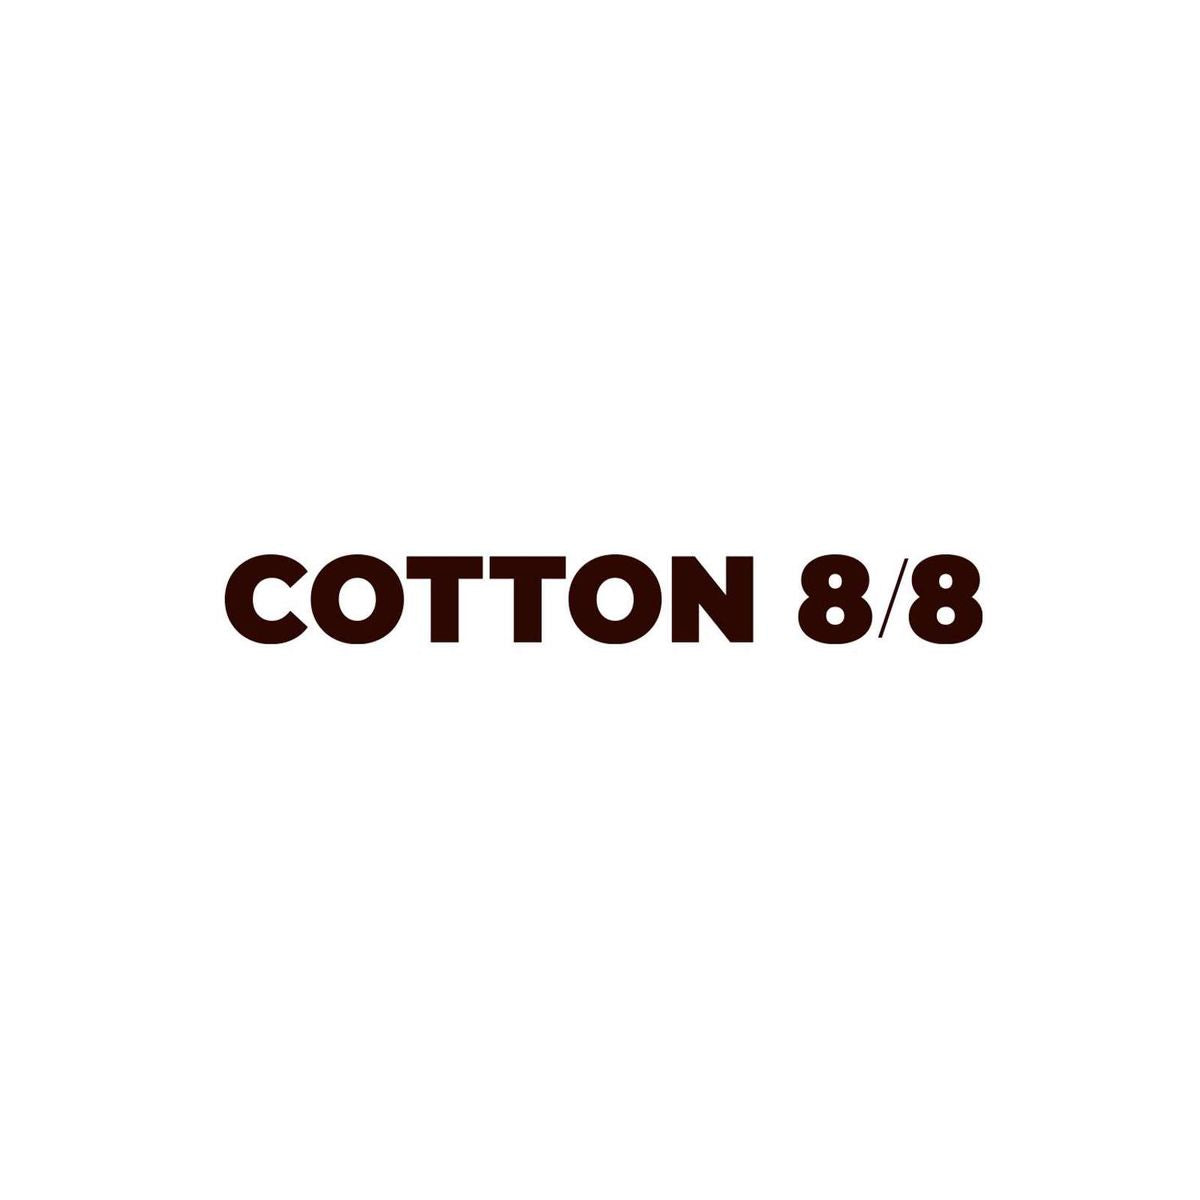 Cotton 8/8